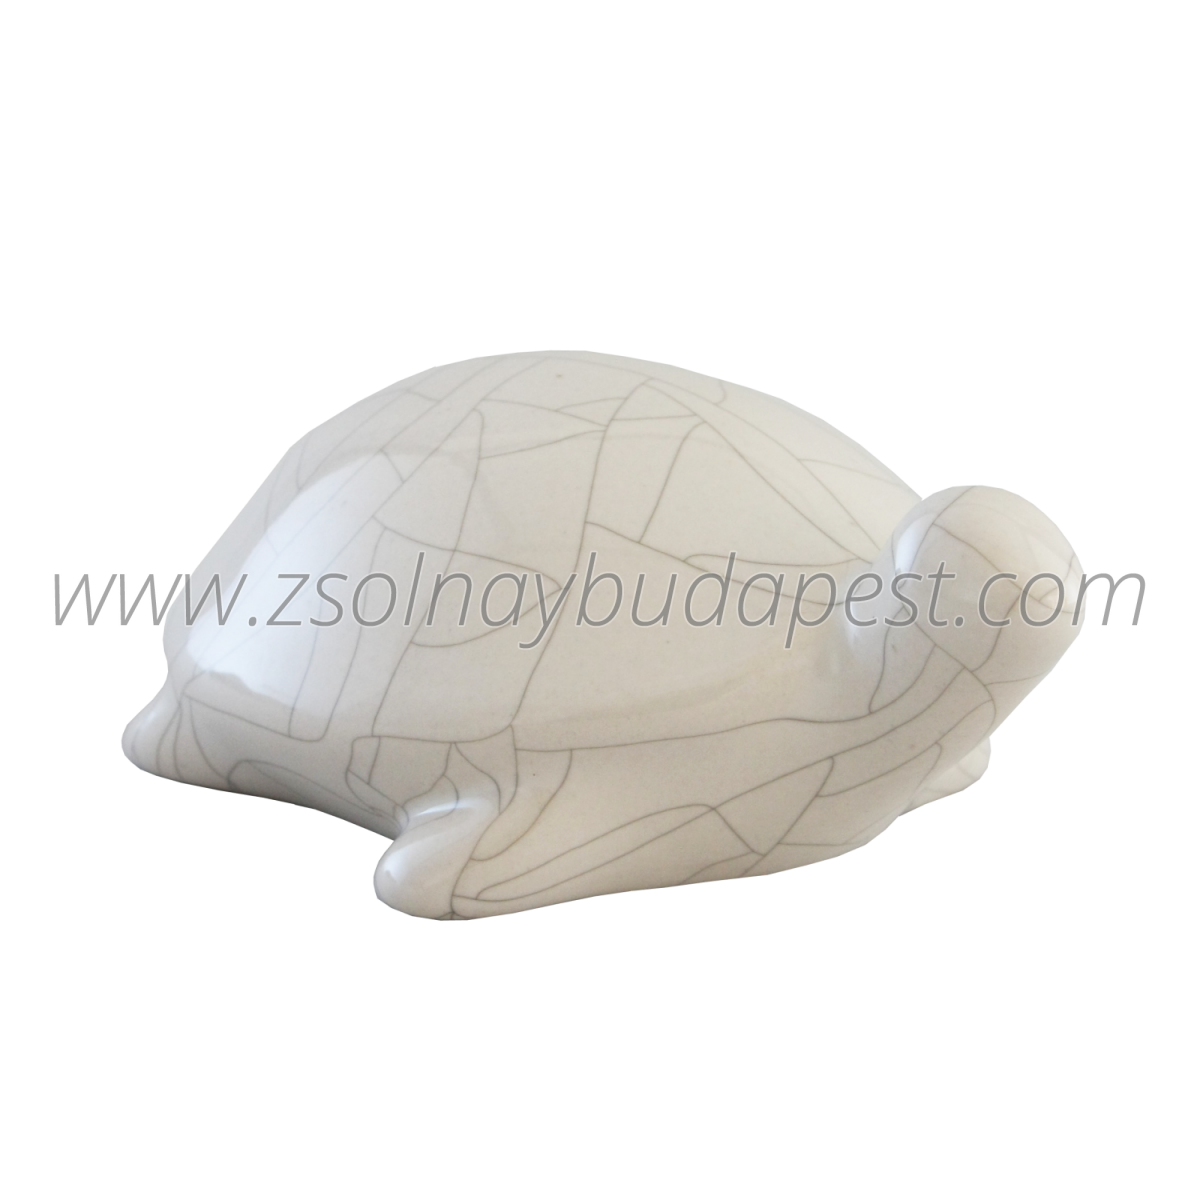 White eosin turtle